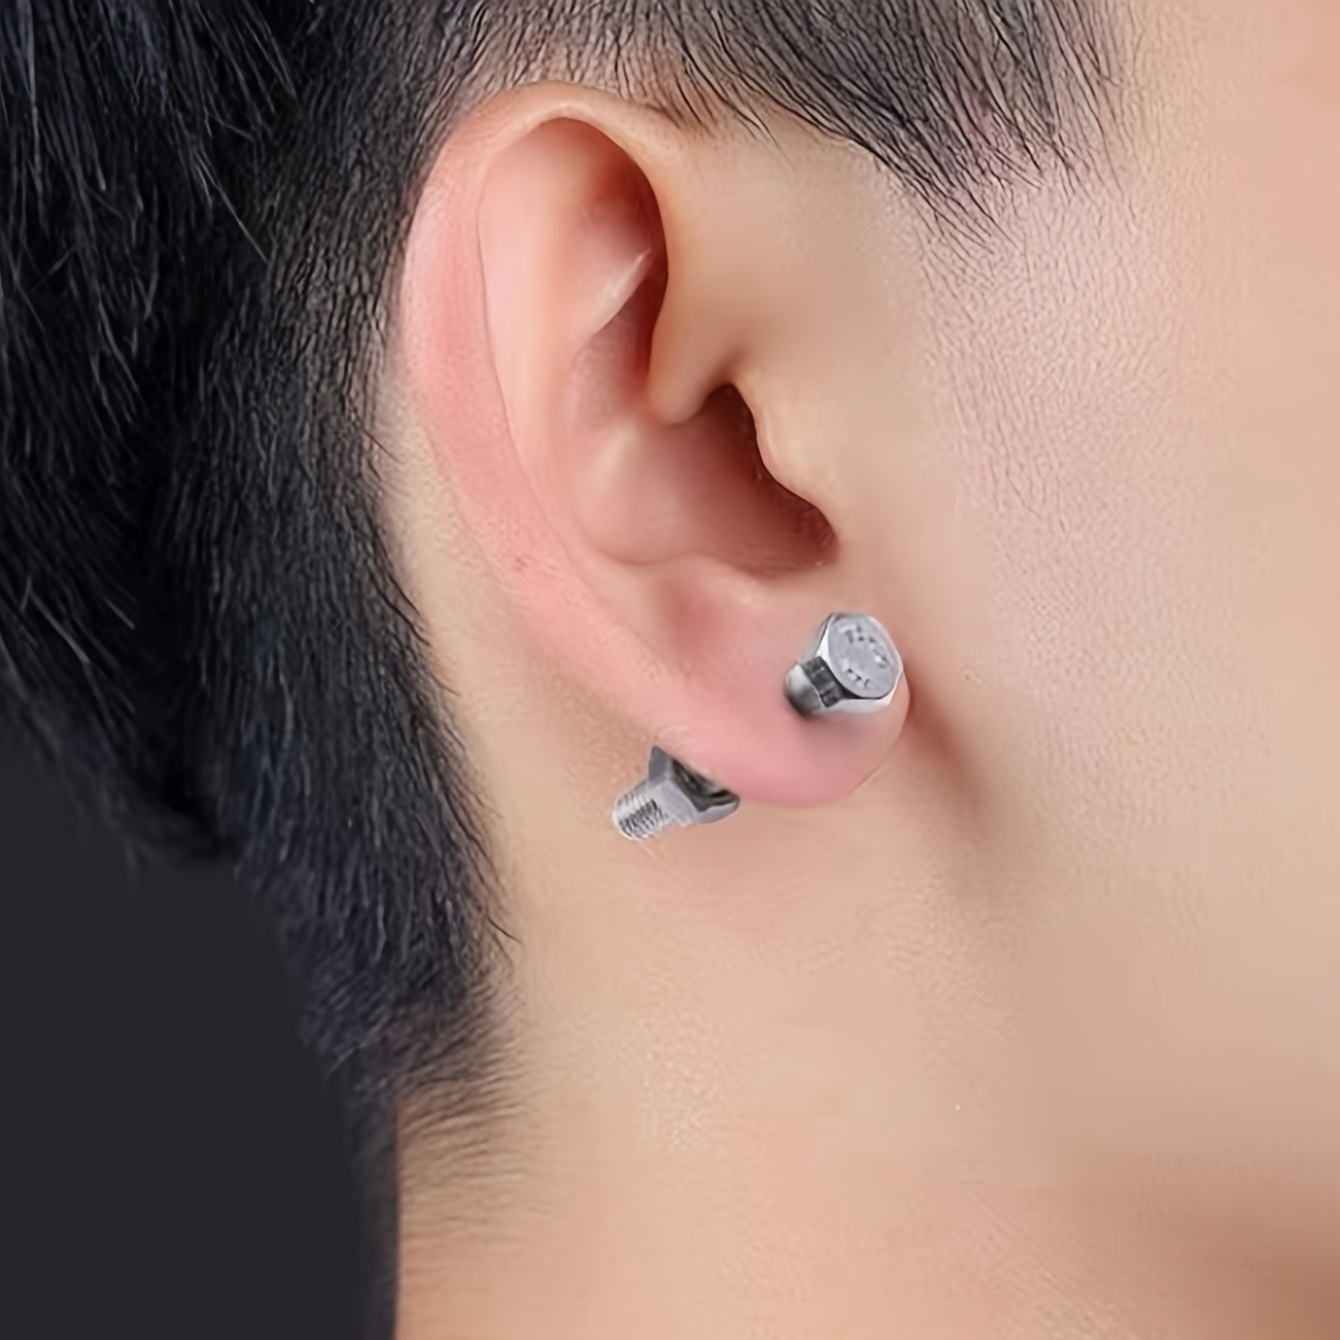 Irregular Ear Clips  Clip on earrings, Ear, Stud earrings for men